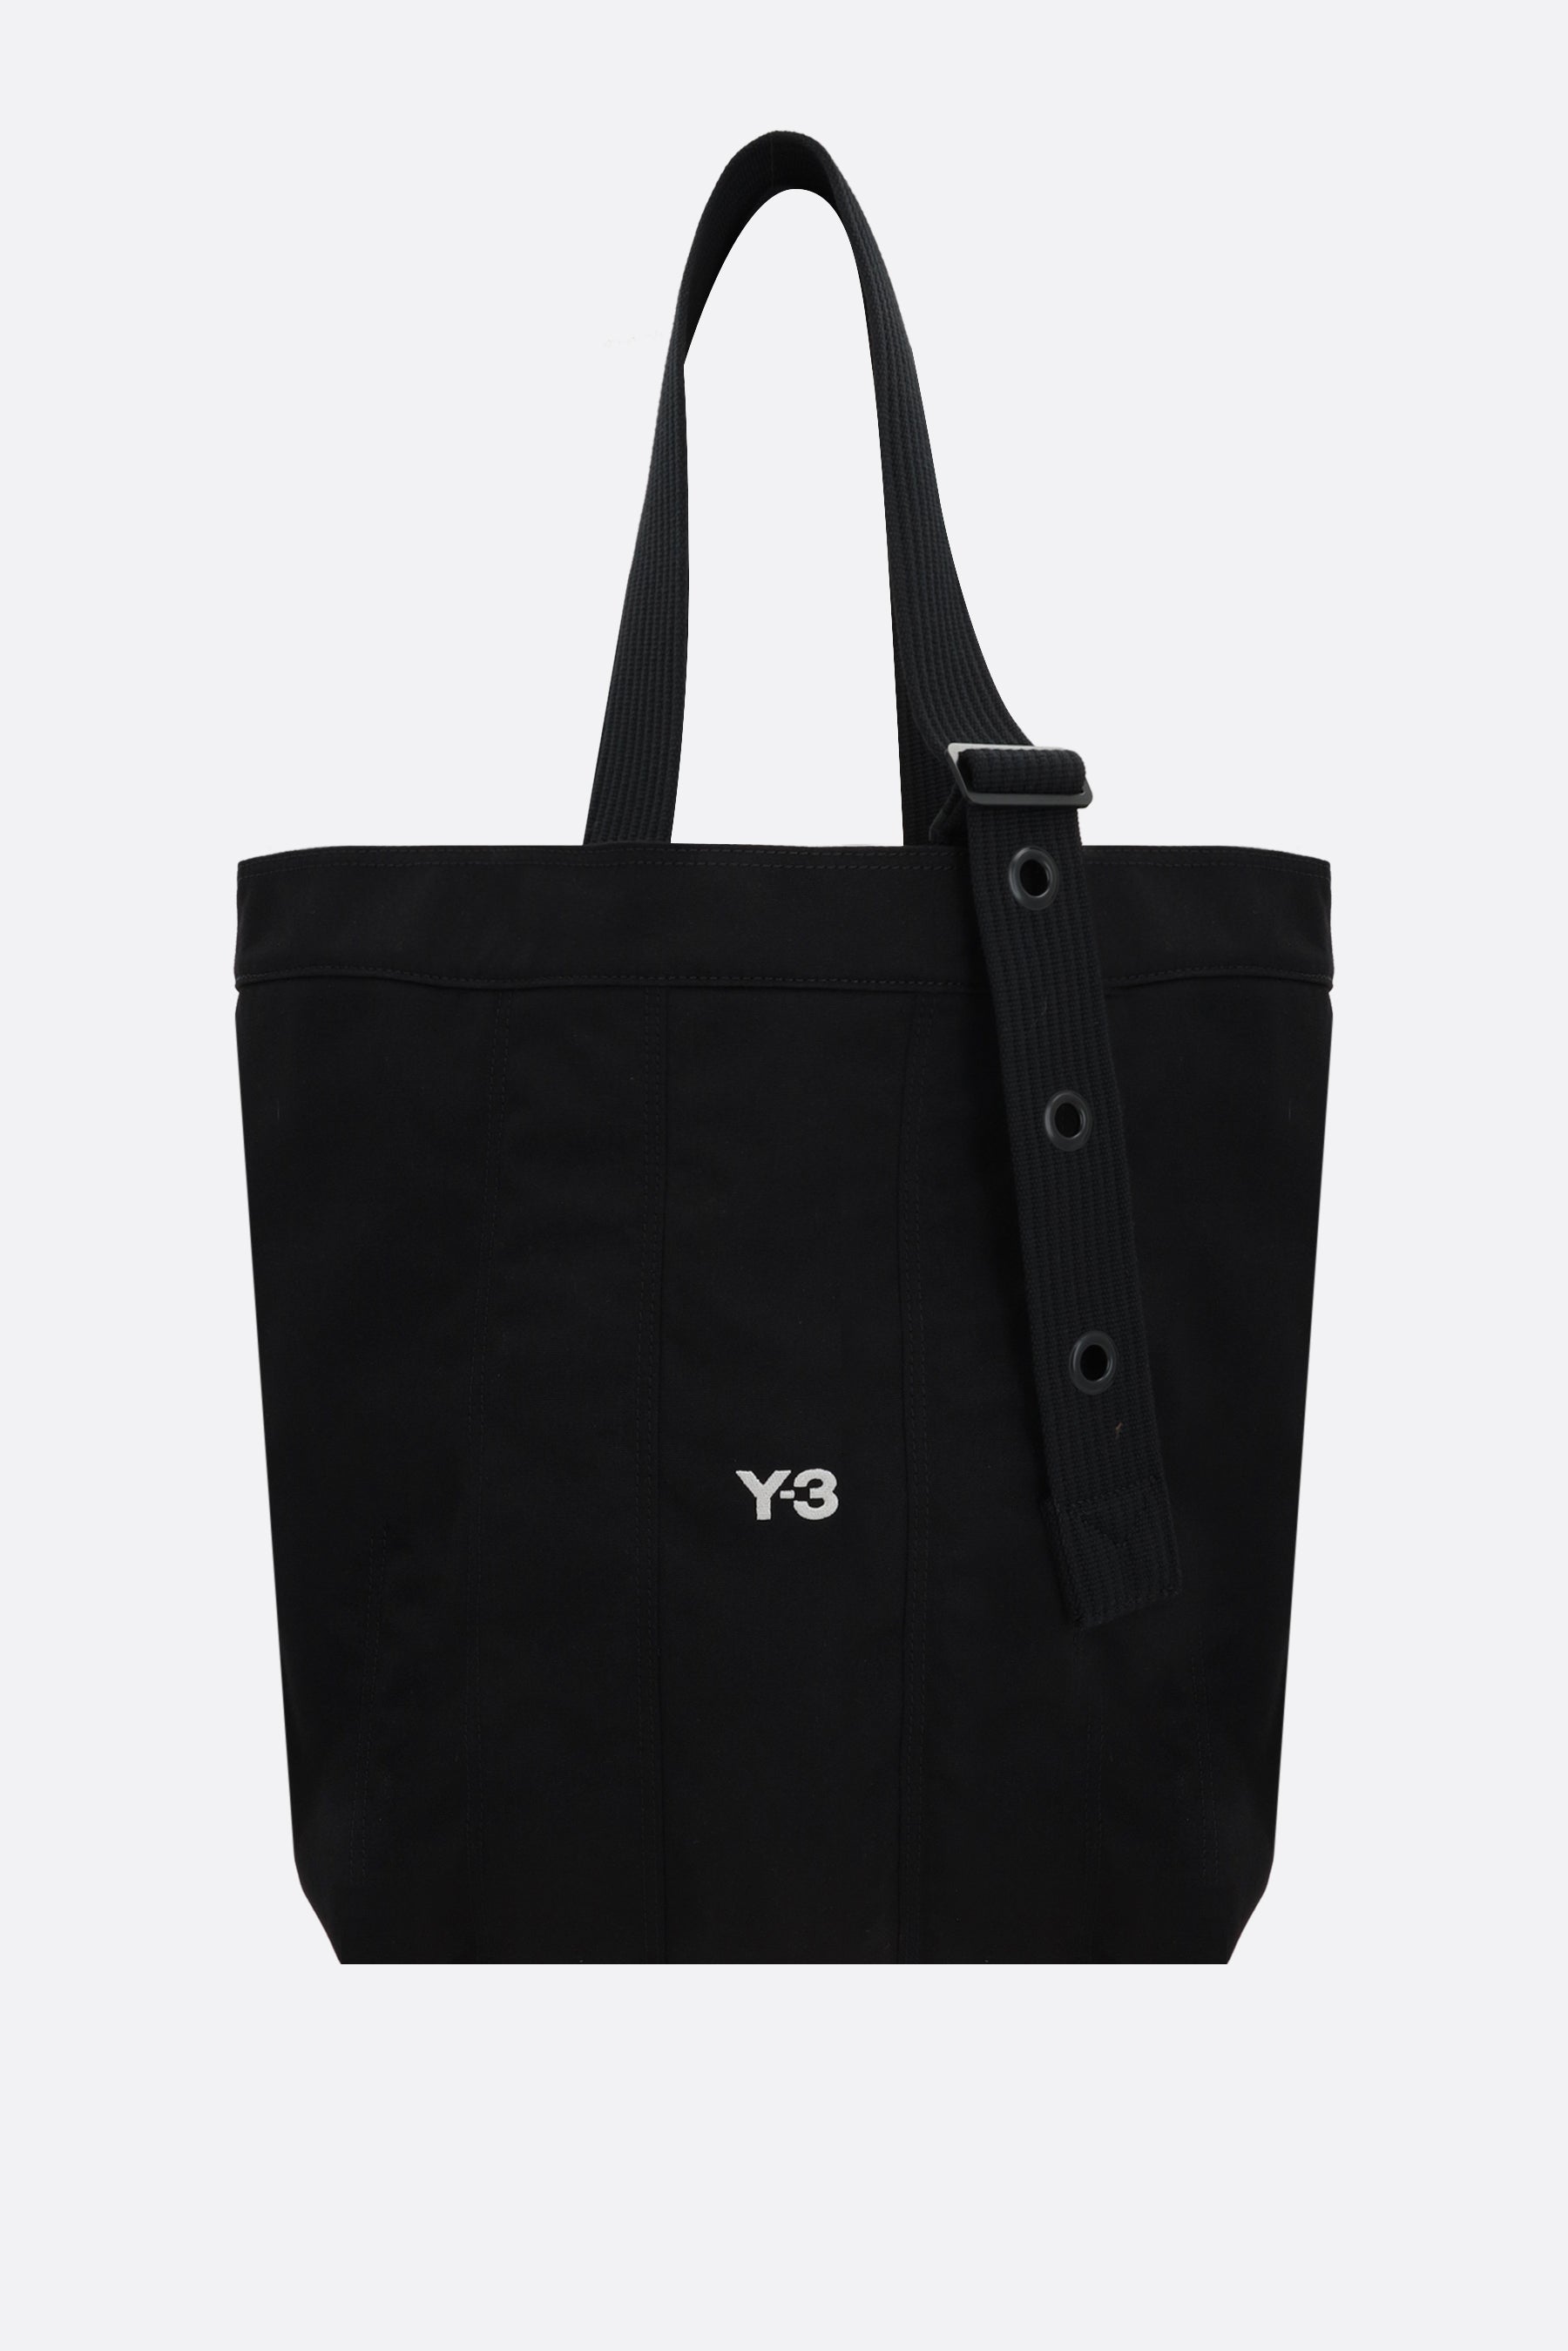 Y-3 recycled nylon tote bag